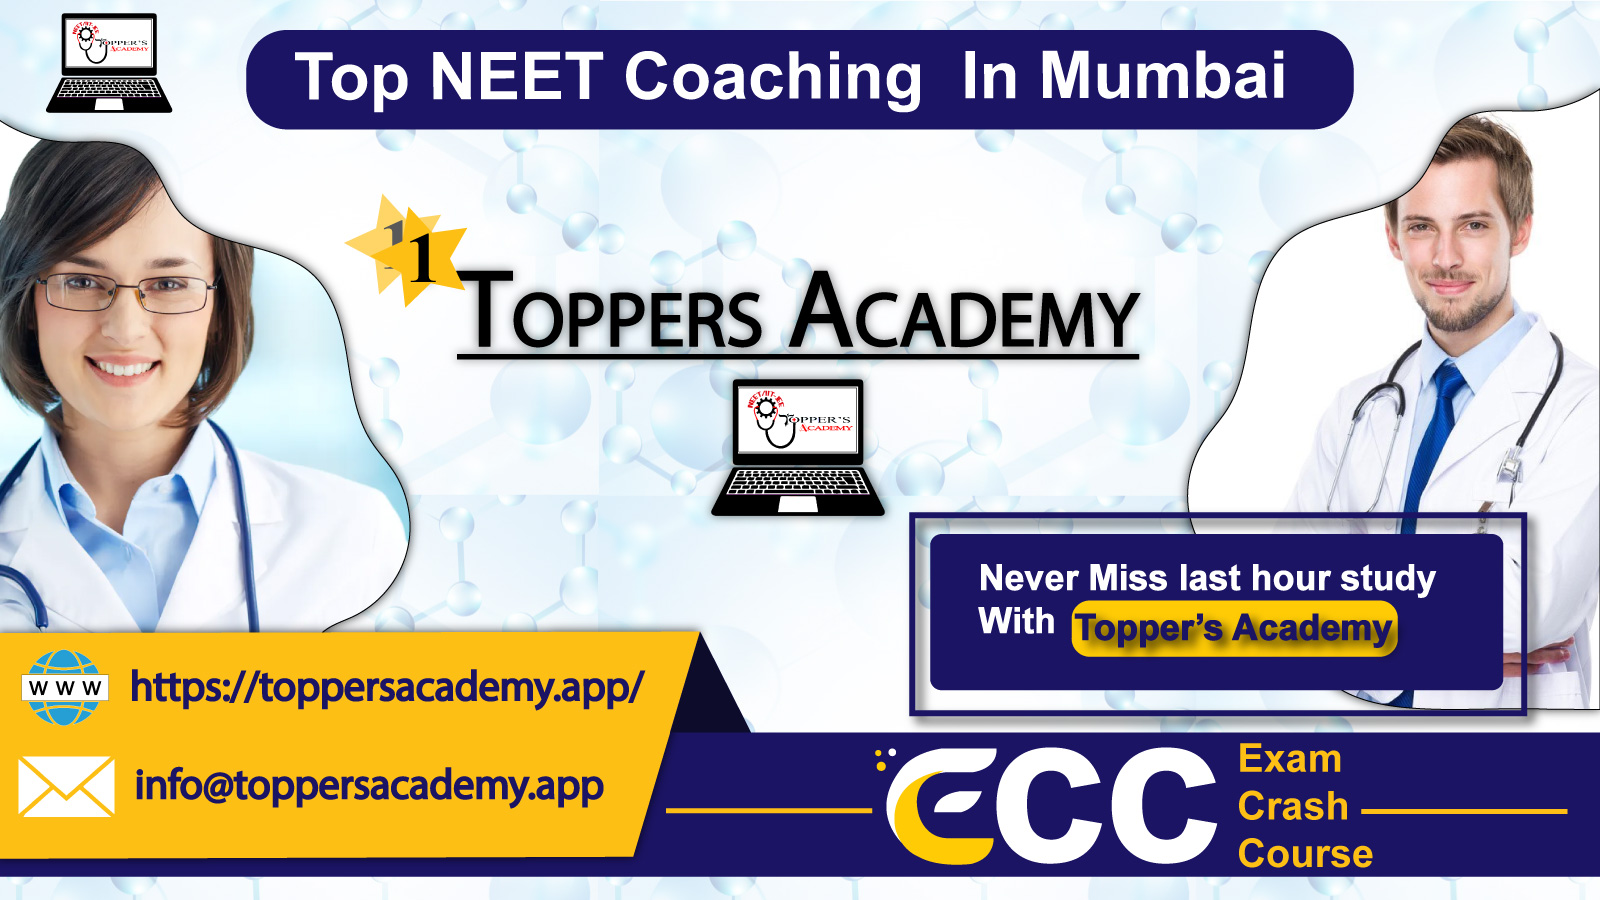 Top coaching classes for neet in mumbai